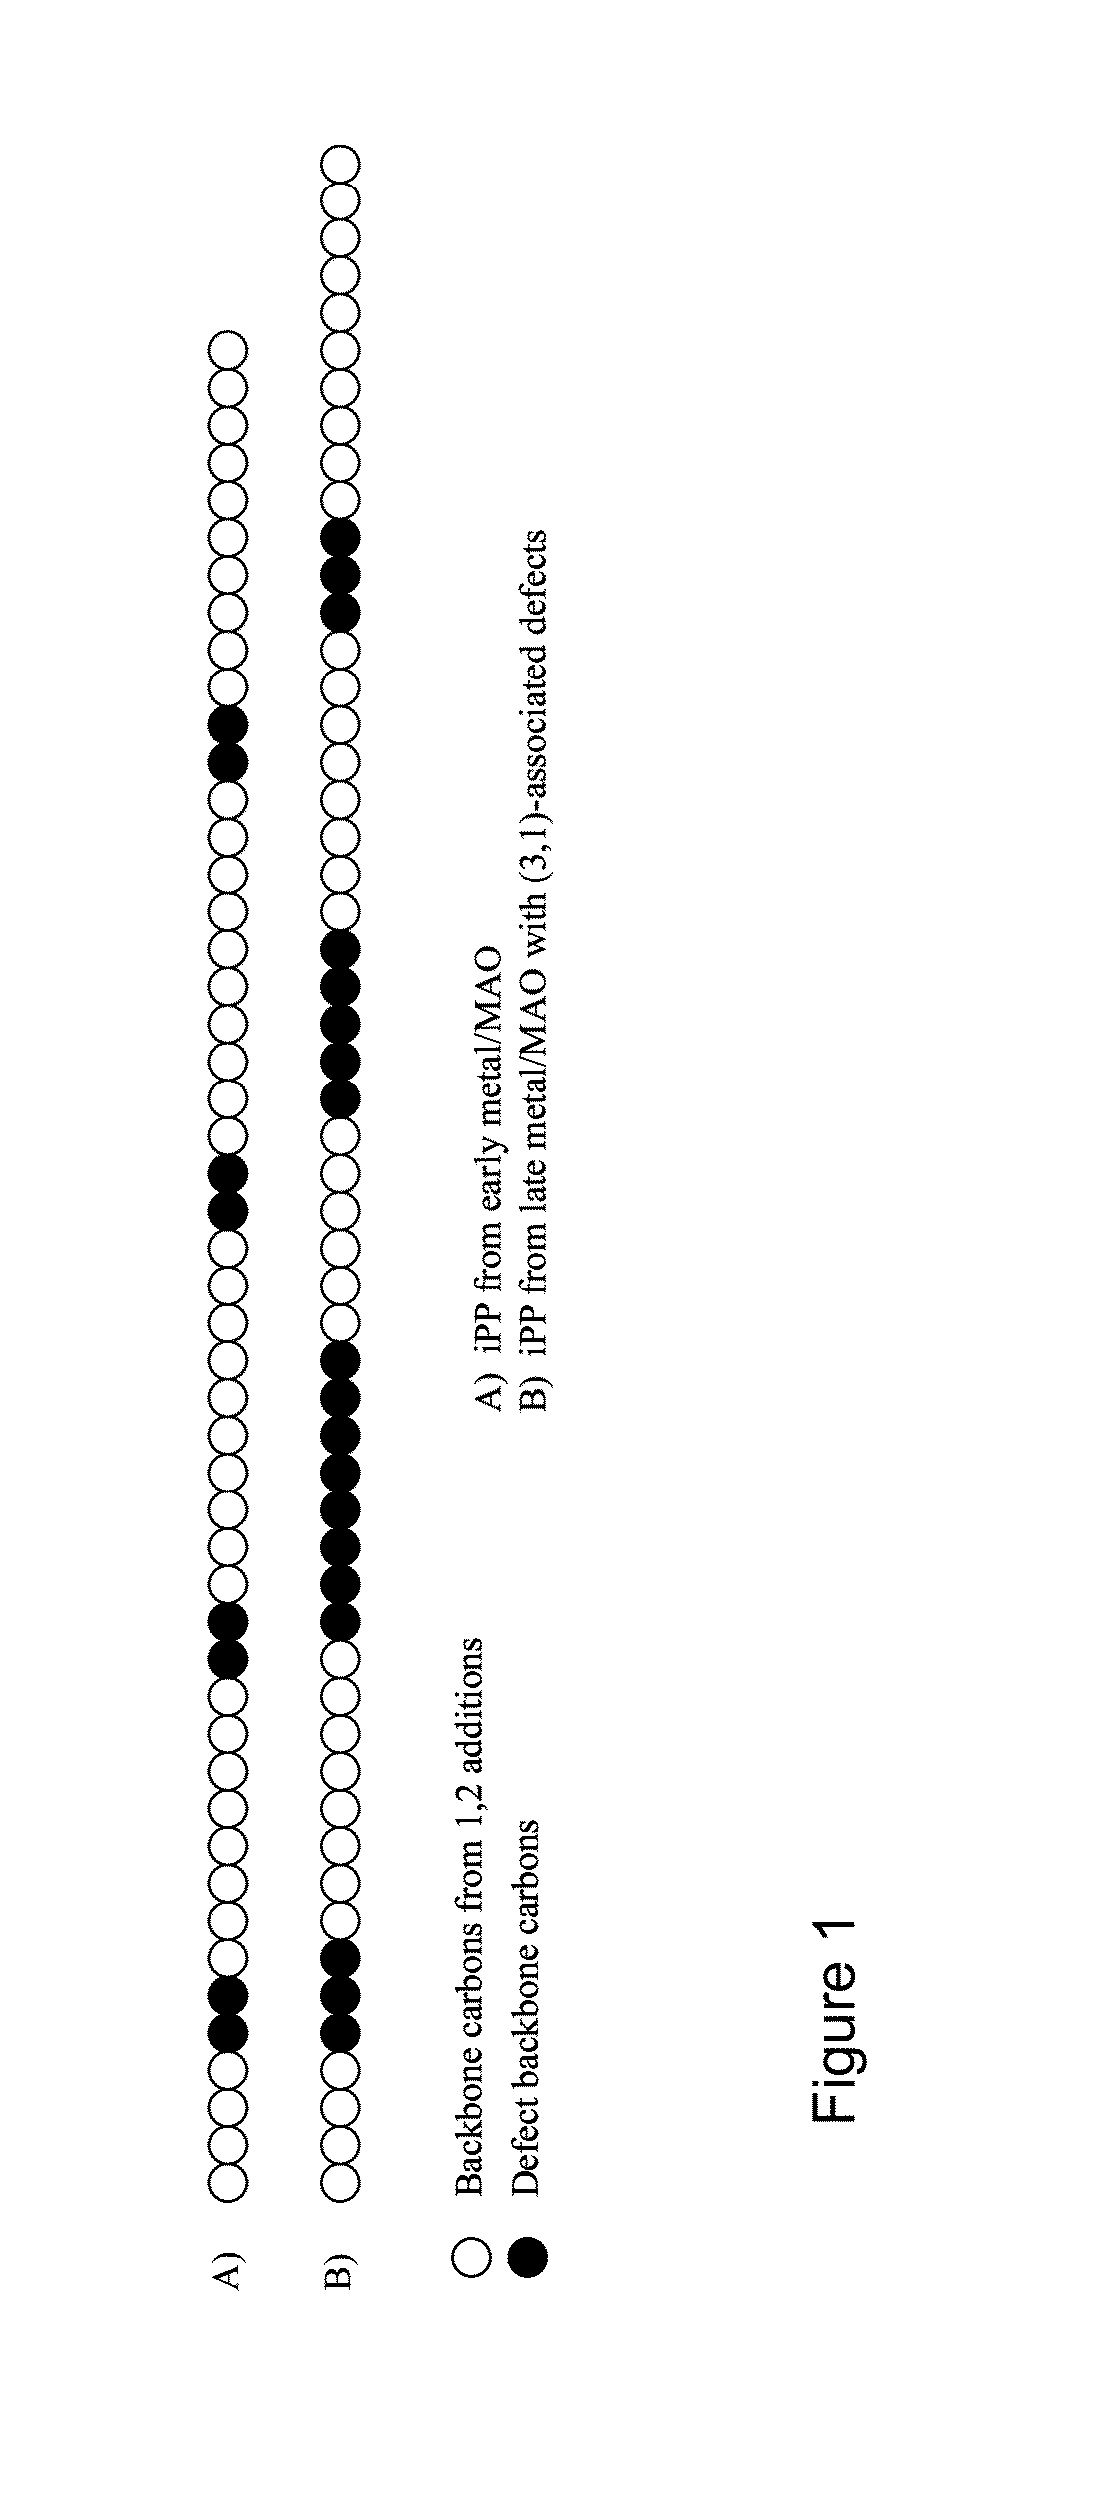 Methods of constructing alkene-based homopolymer polyolefins having reduced crystallinity